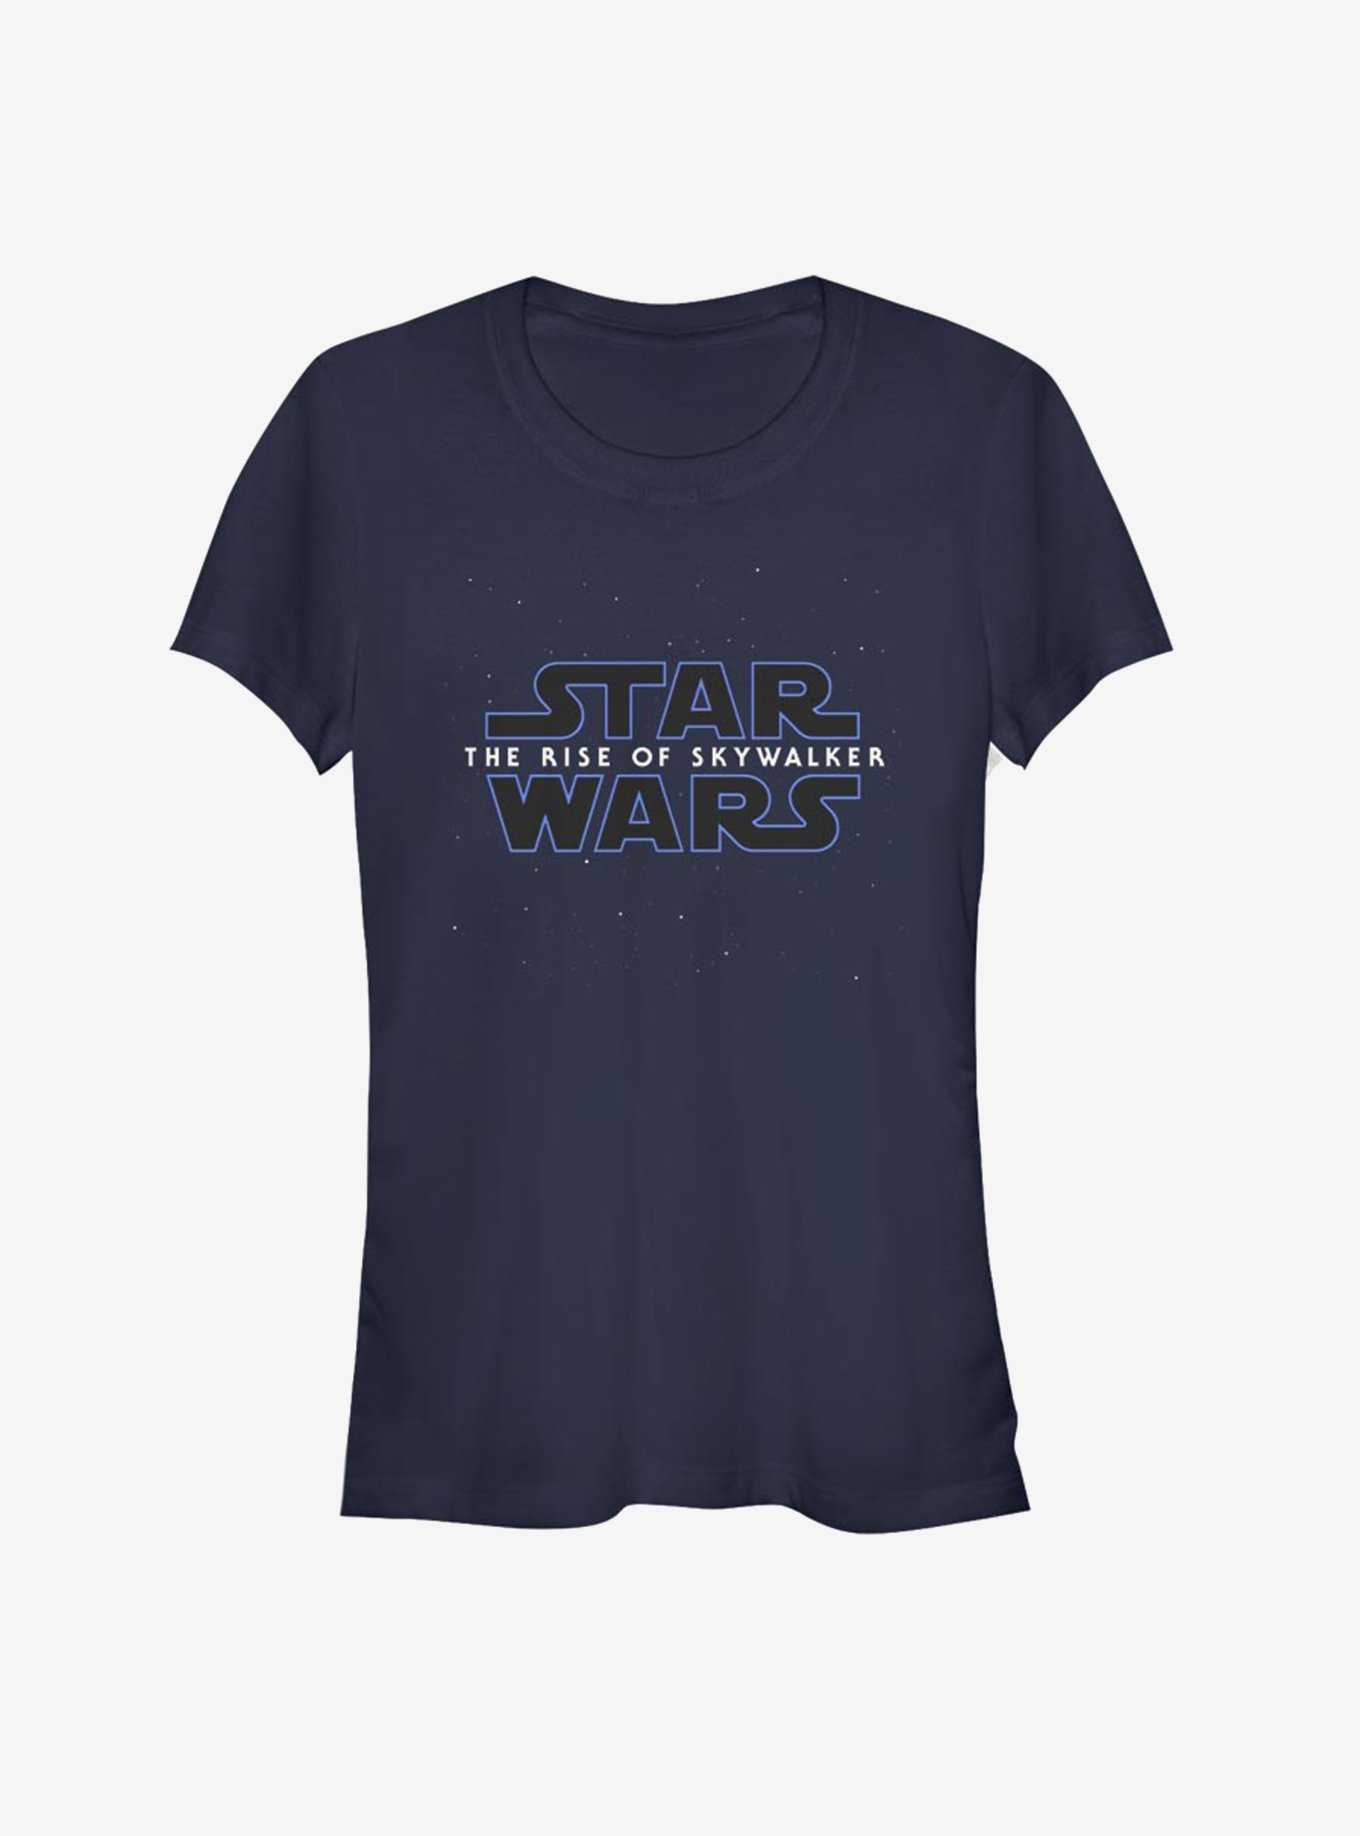 Star Wars: The Rise of Skywalker Stars Girls T-Shirt, , hi-res